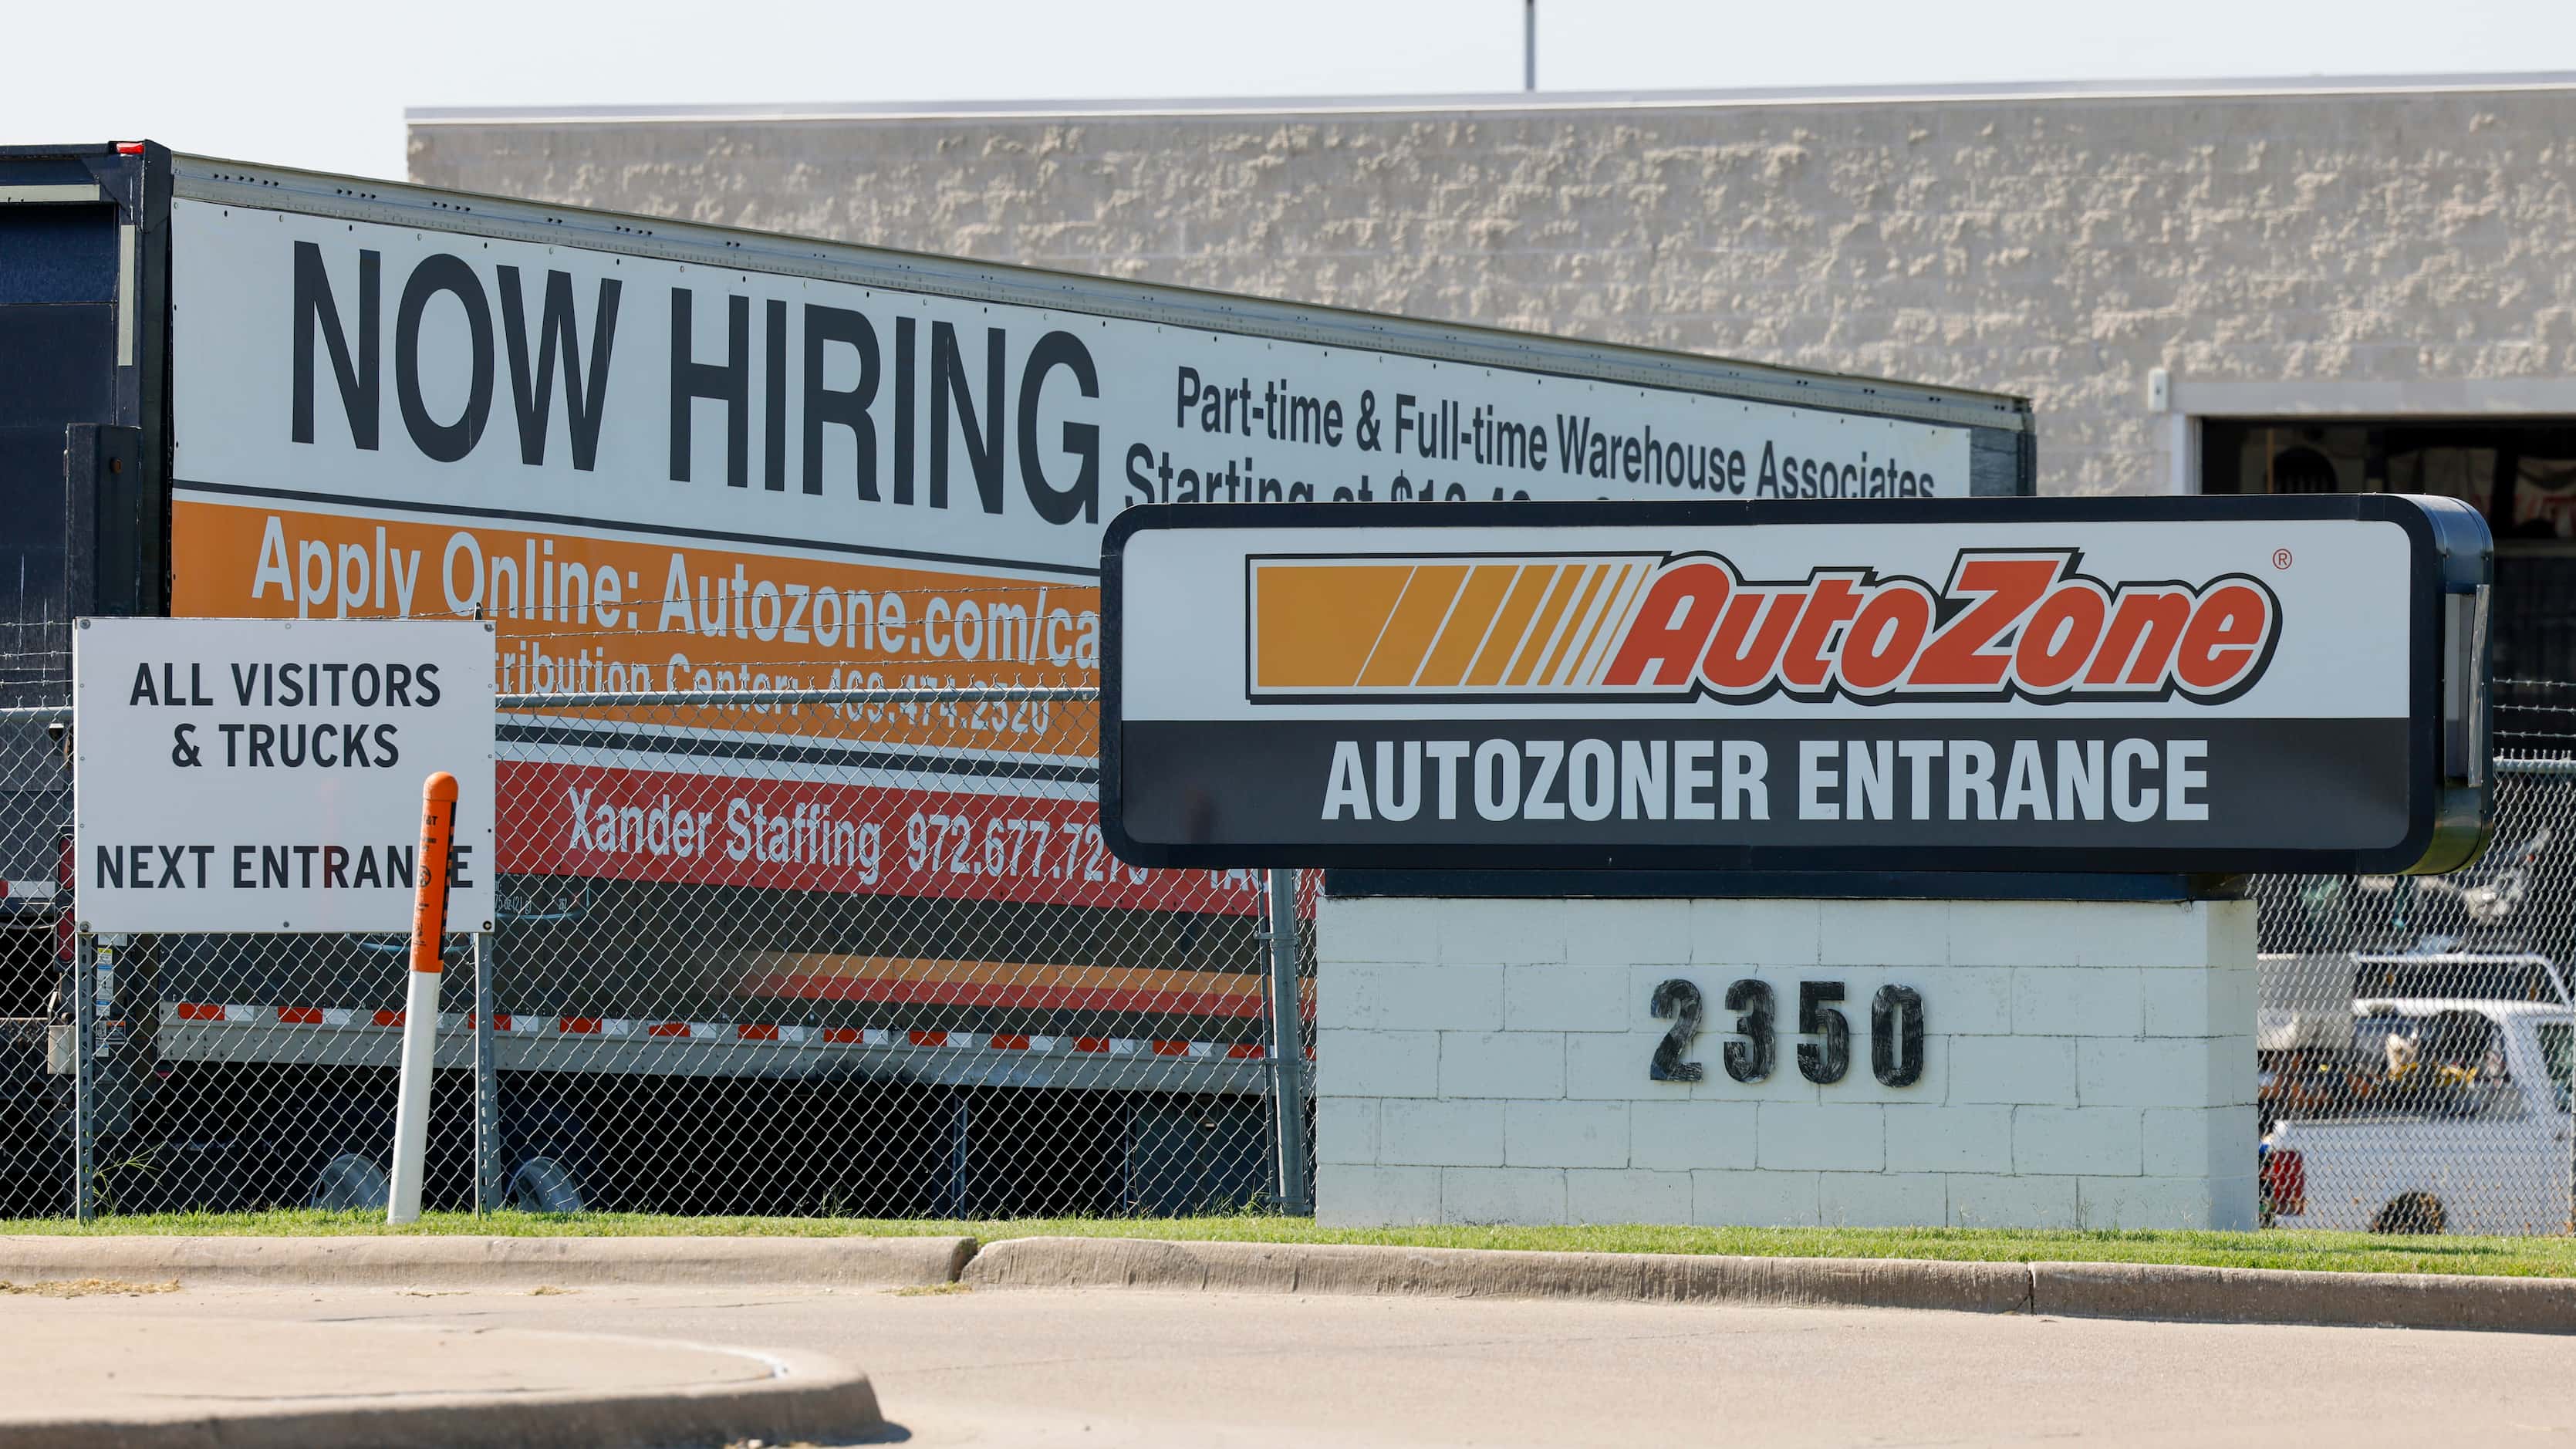 An AutoZone distribution center entrance sign.